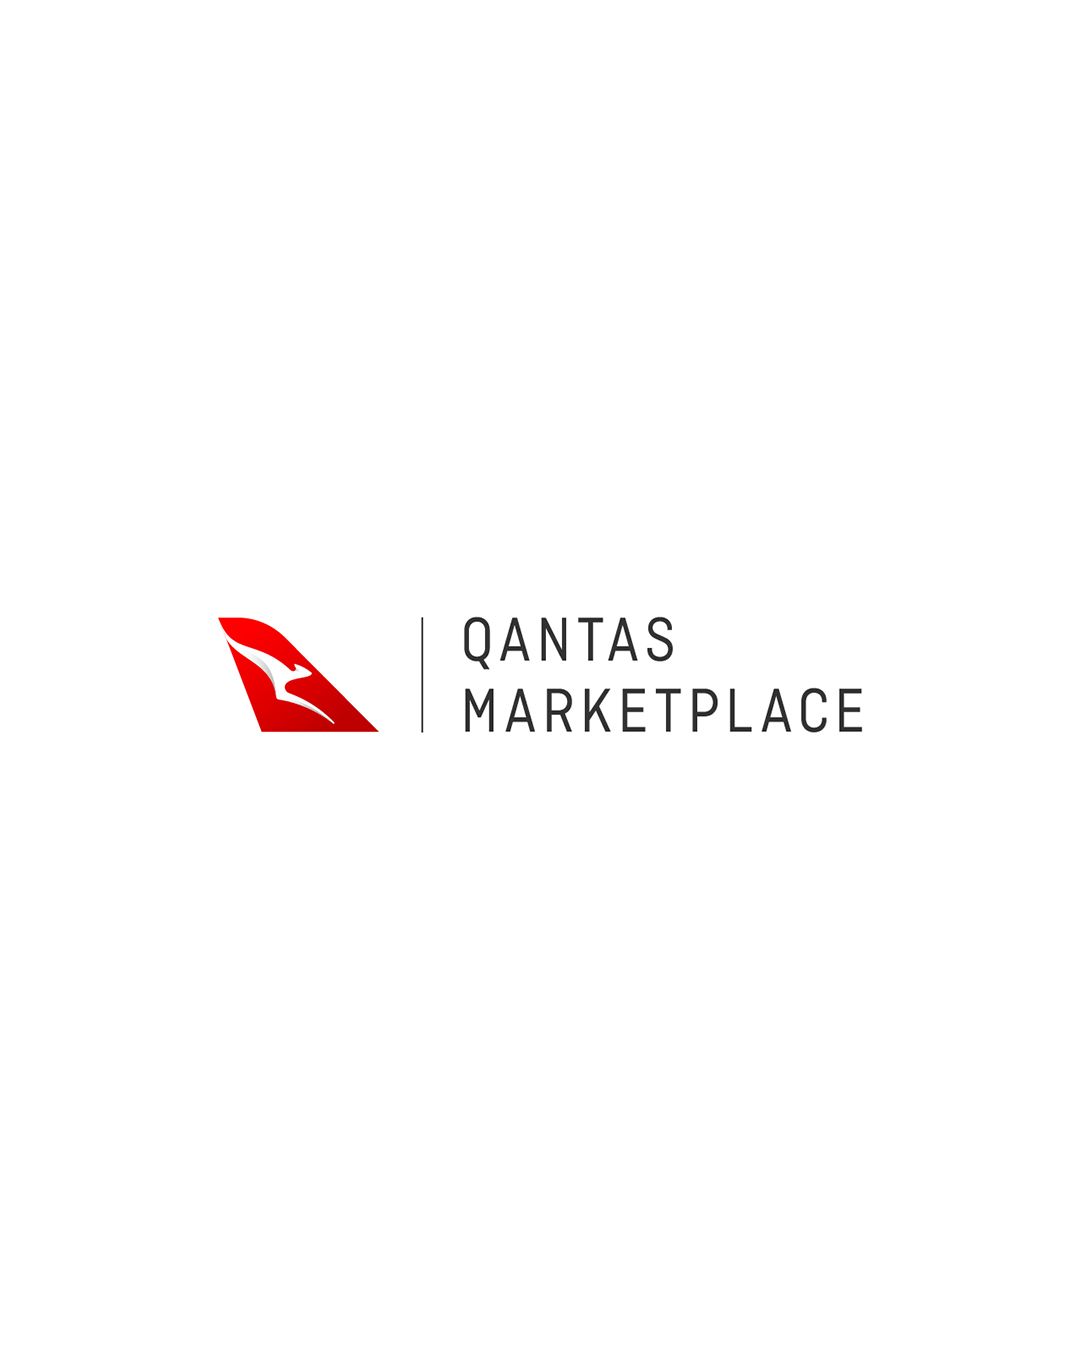 Qantas Marketplace